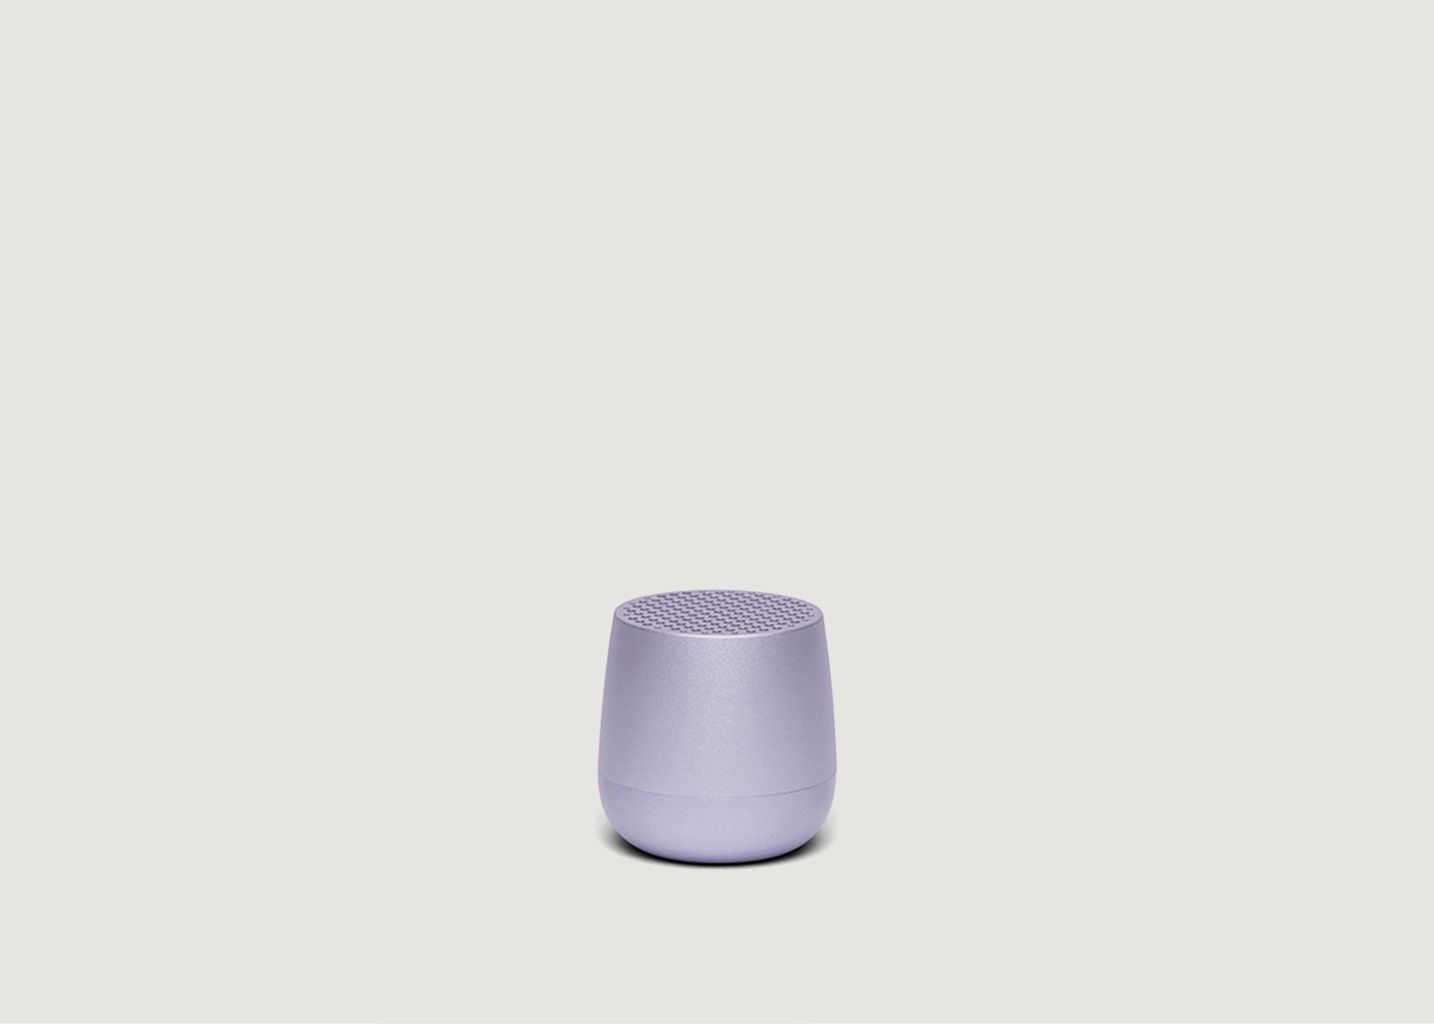 Mino + Mini Bluetooth Speaker - Lexon Design